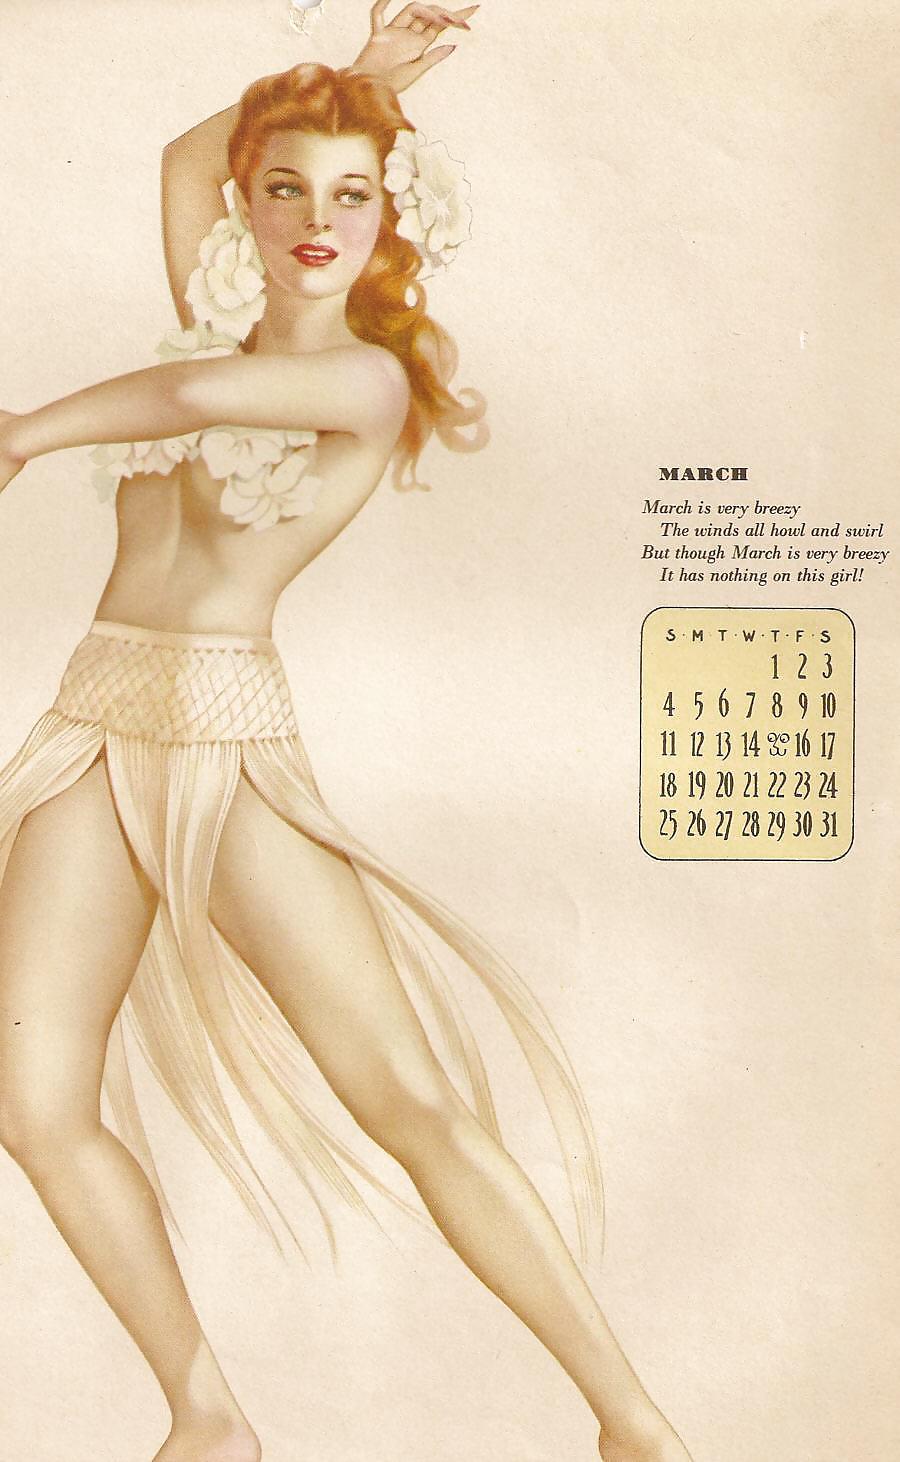 Calendario erotico 5 - vargas pin-up 1945
 #9307985